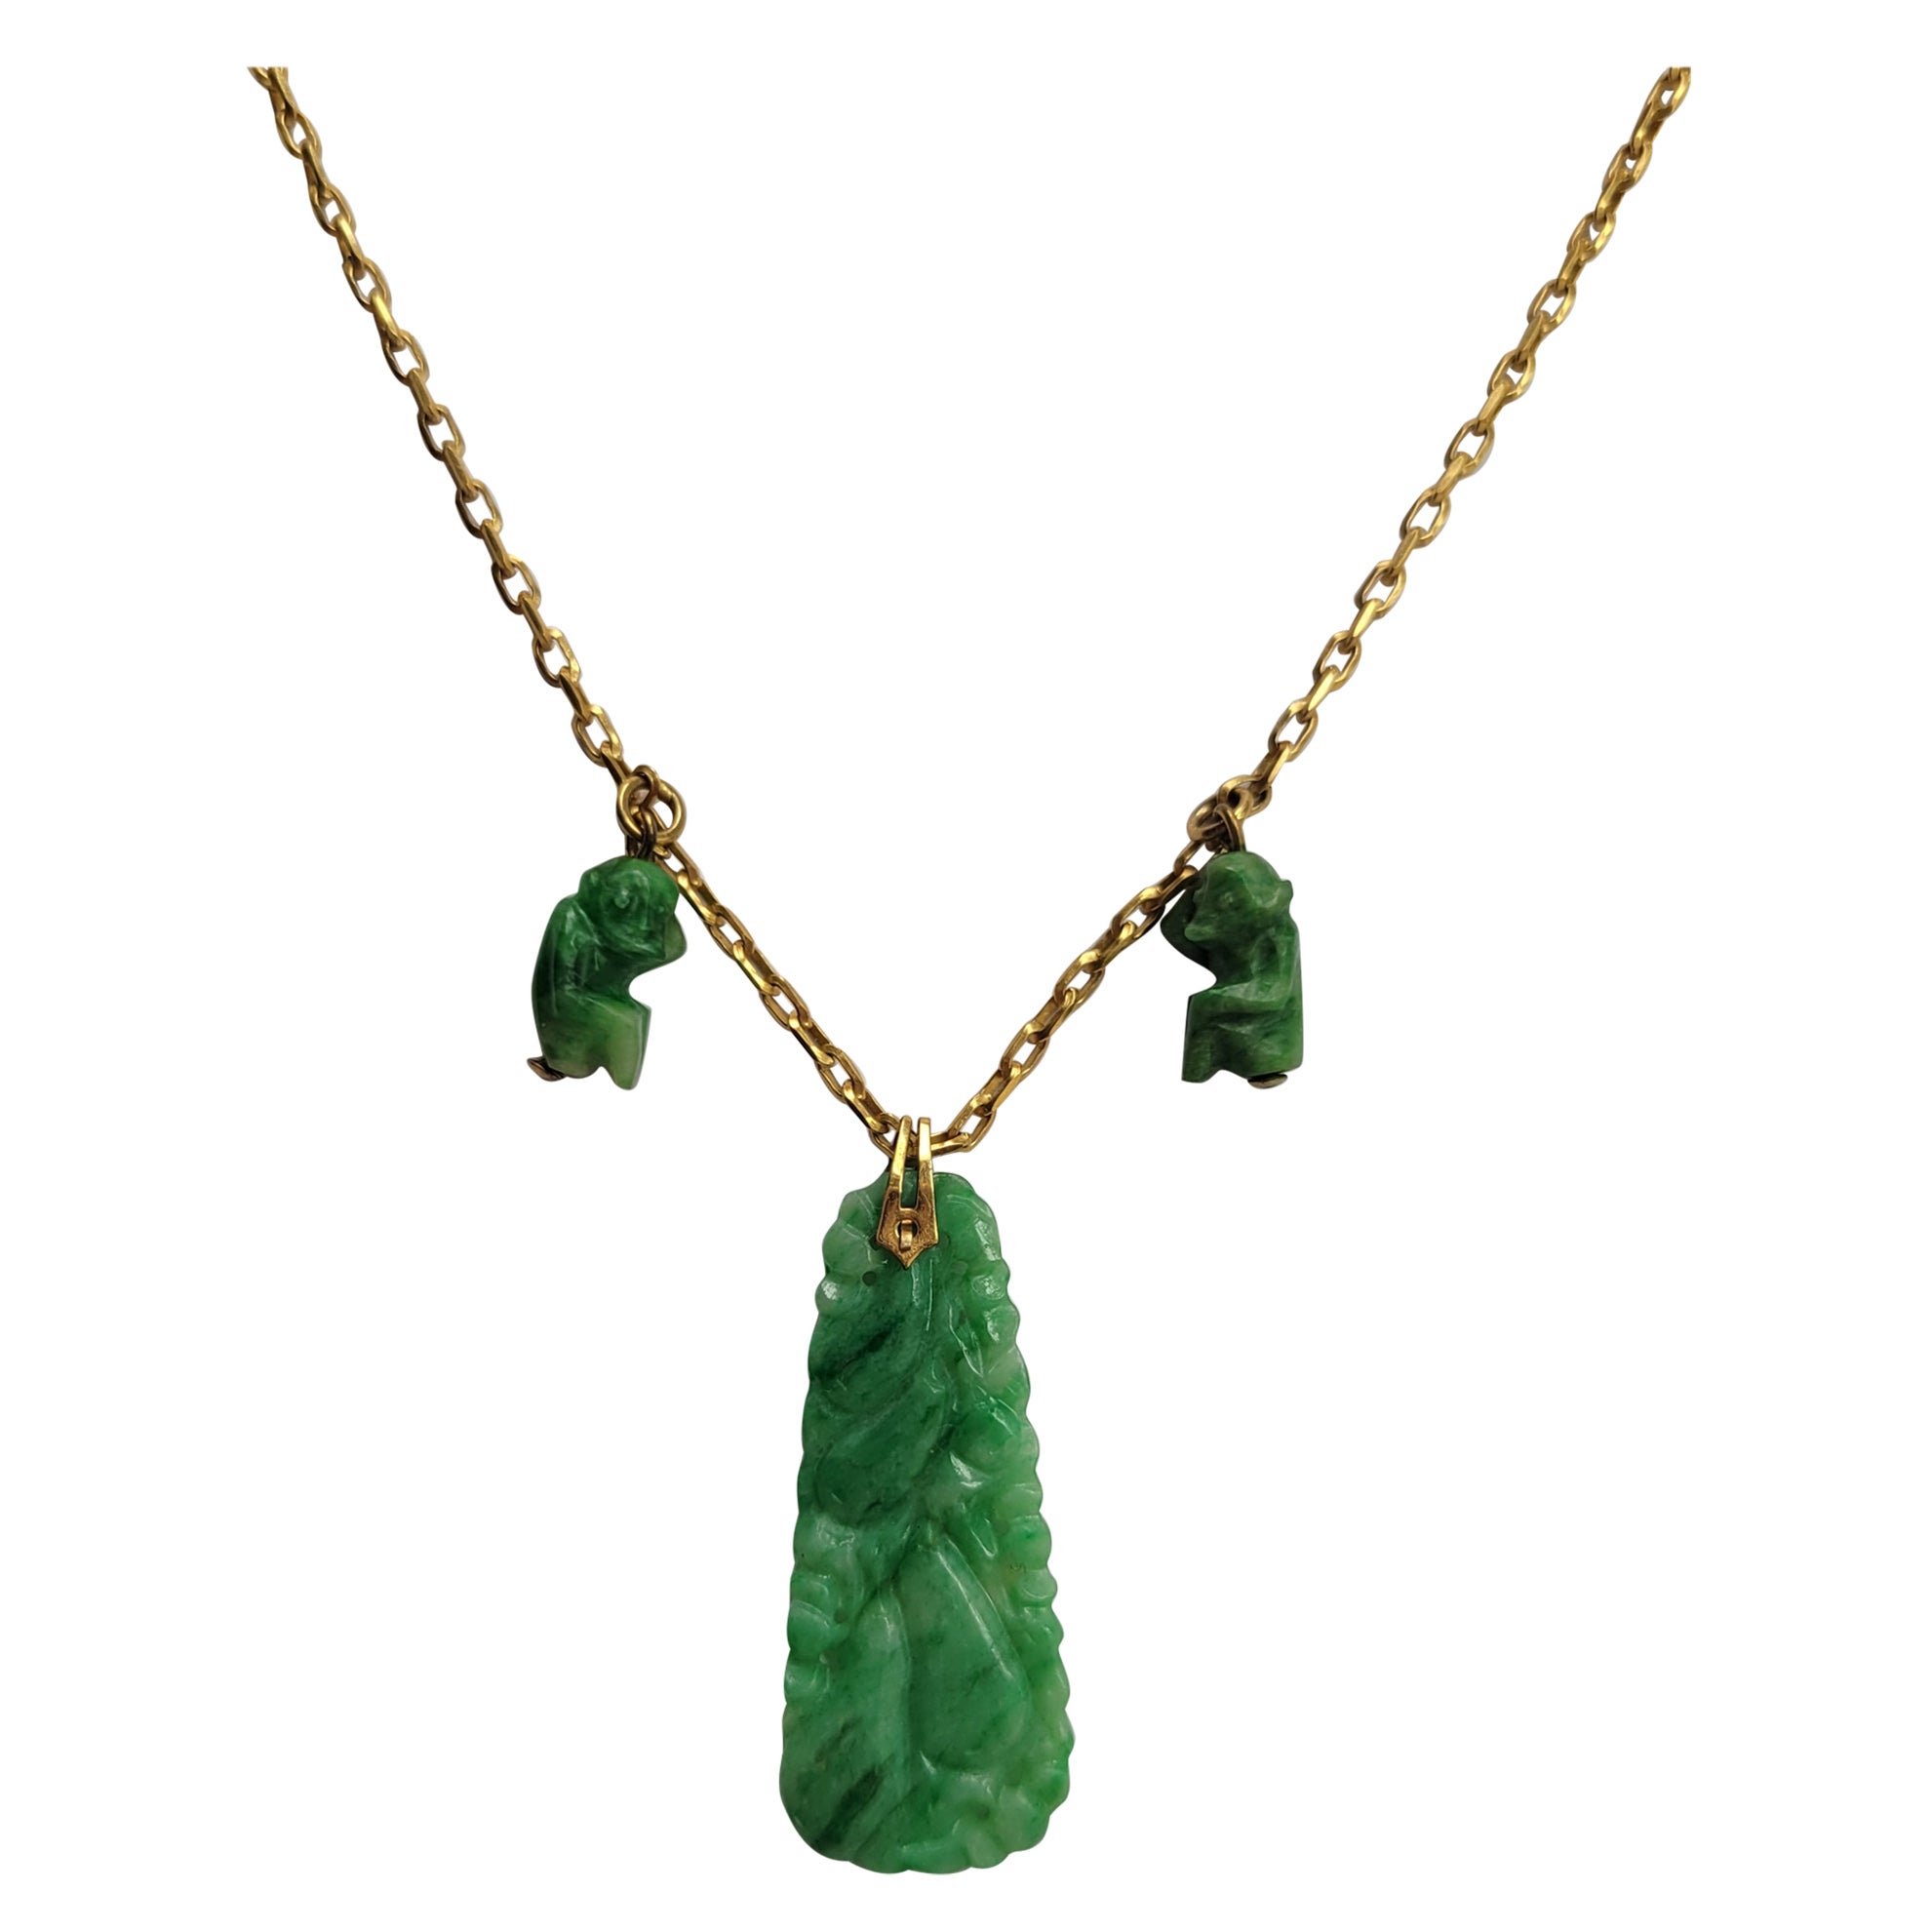 Unusual Vintage Carved Jade Monkey pendant necklace For Sale